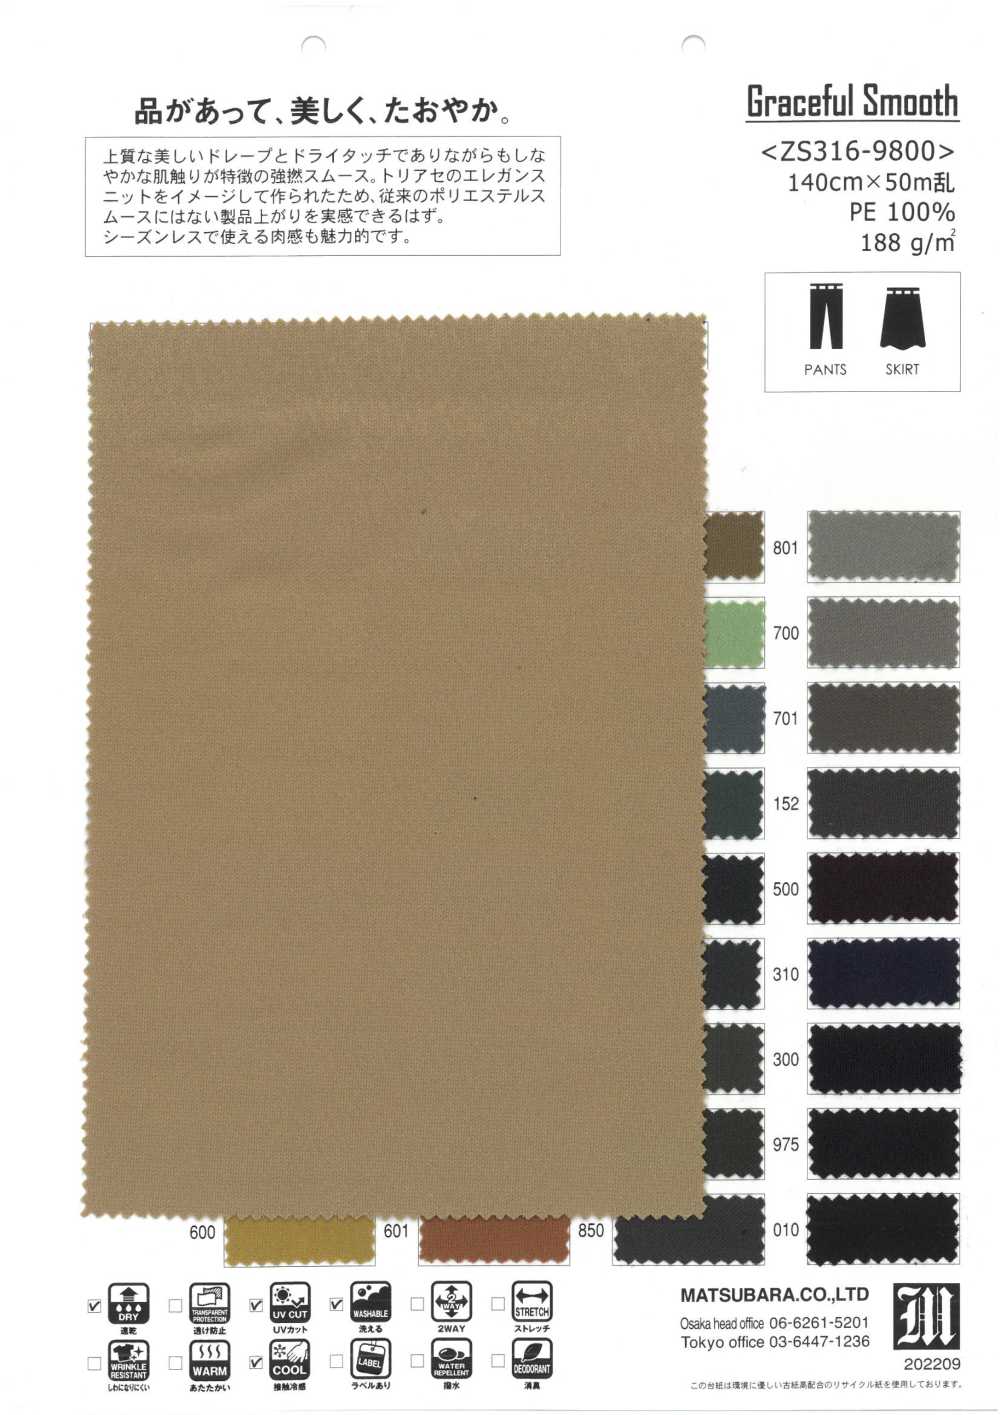 ZS316-9800 Elegante Y Suave[Fabrica Textil] Matsubara